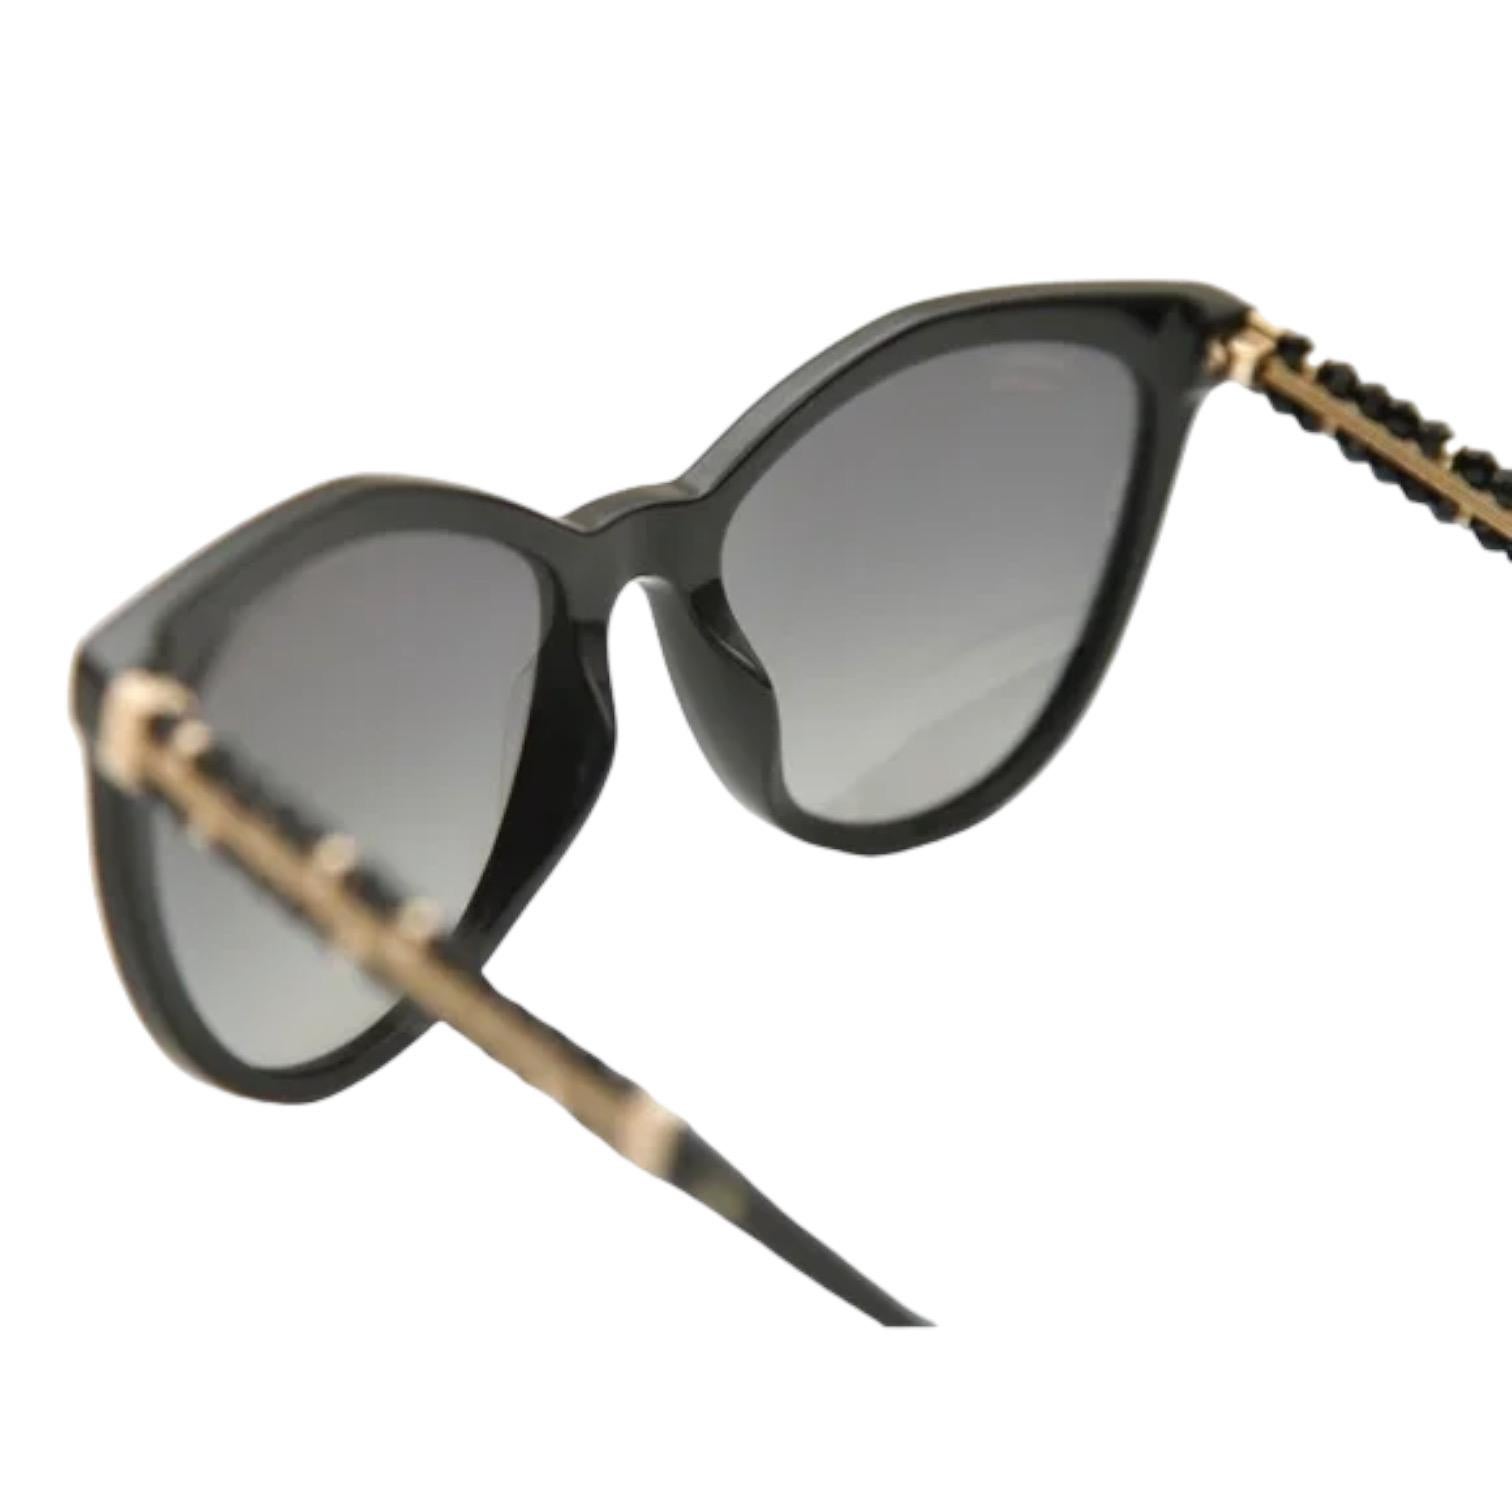 Chanel Black Sunglasses Polarized Grey Lens Beads Gold HW 5376B-A c501-S8 2